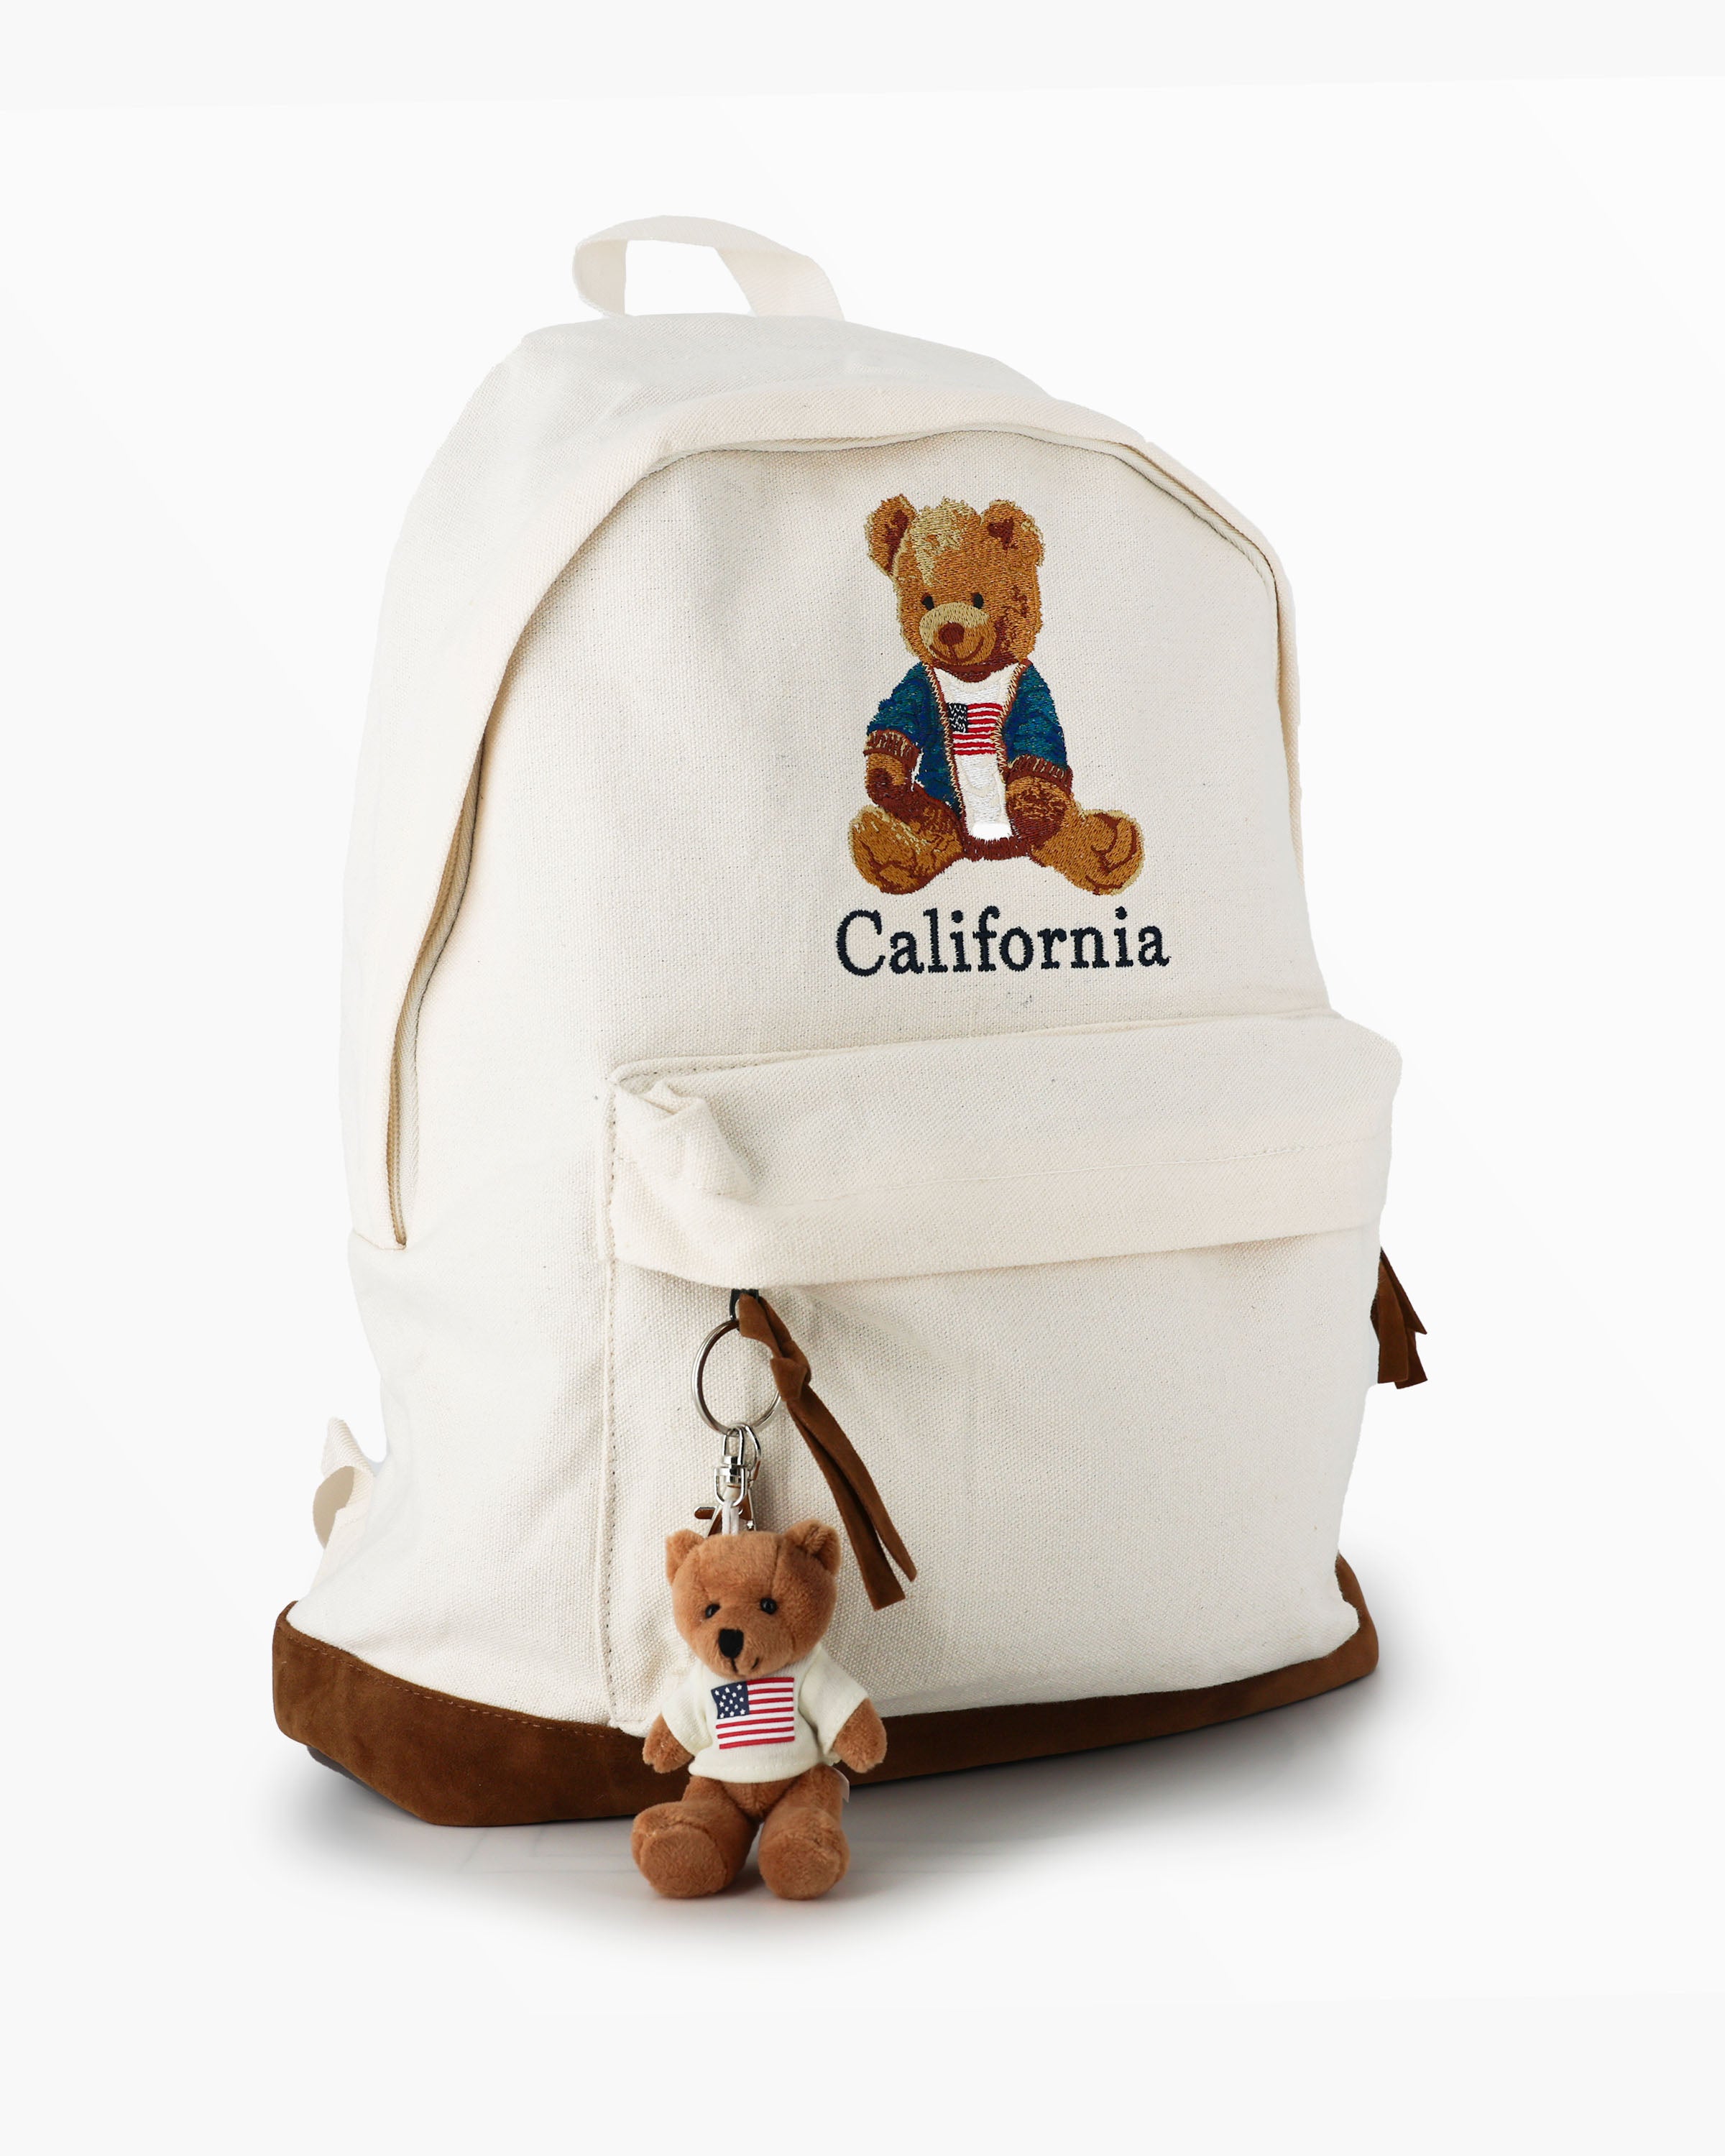 California Teddy Backpack